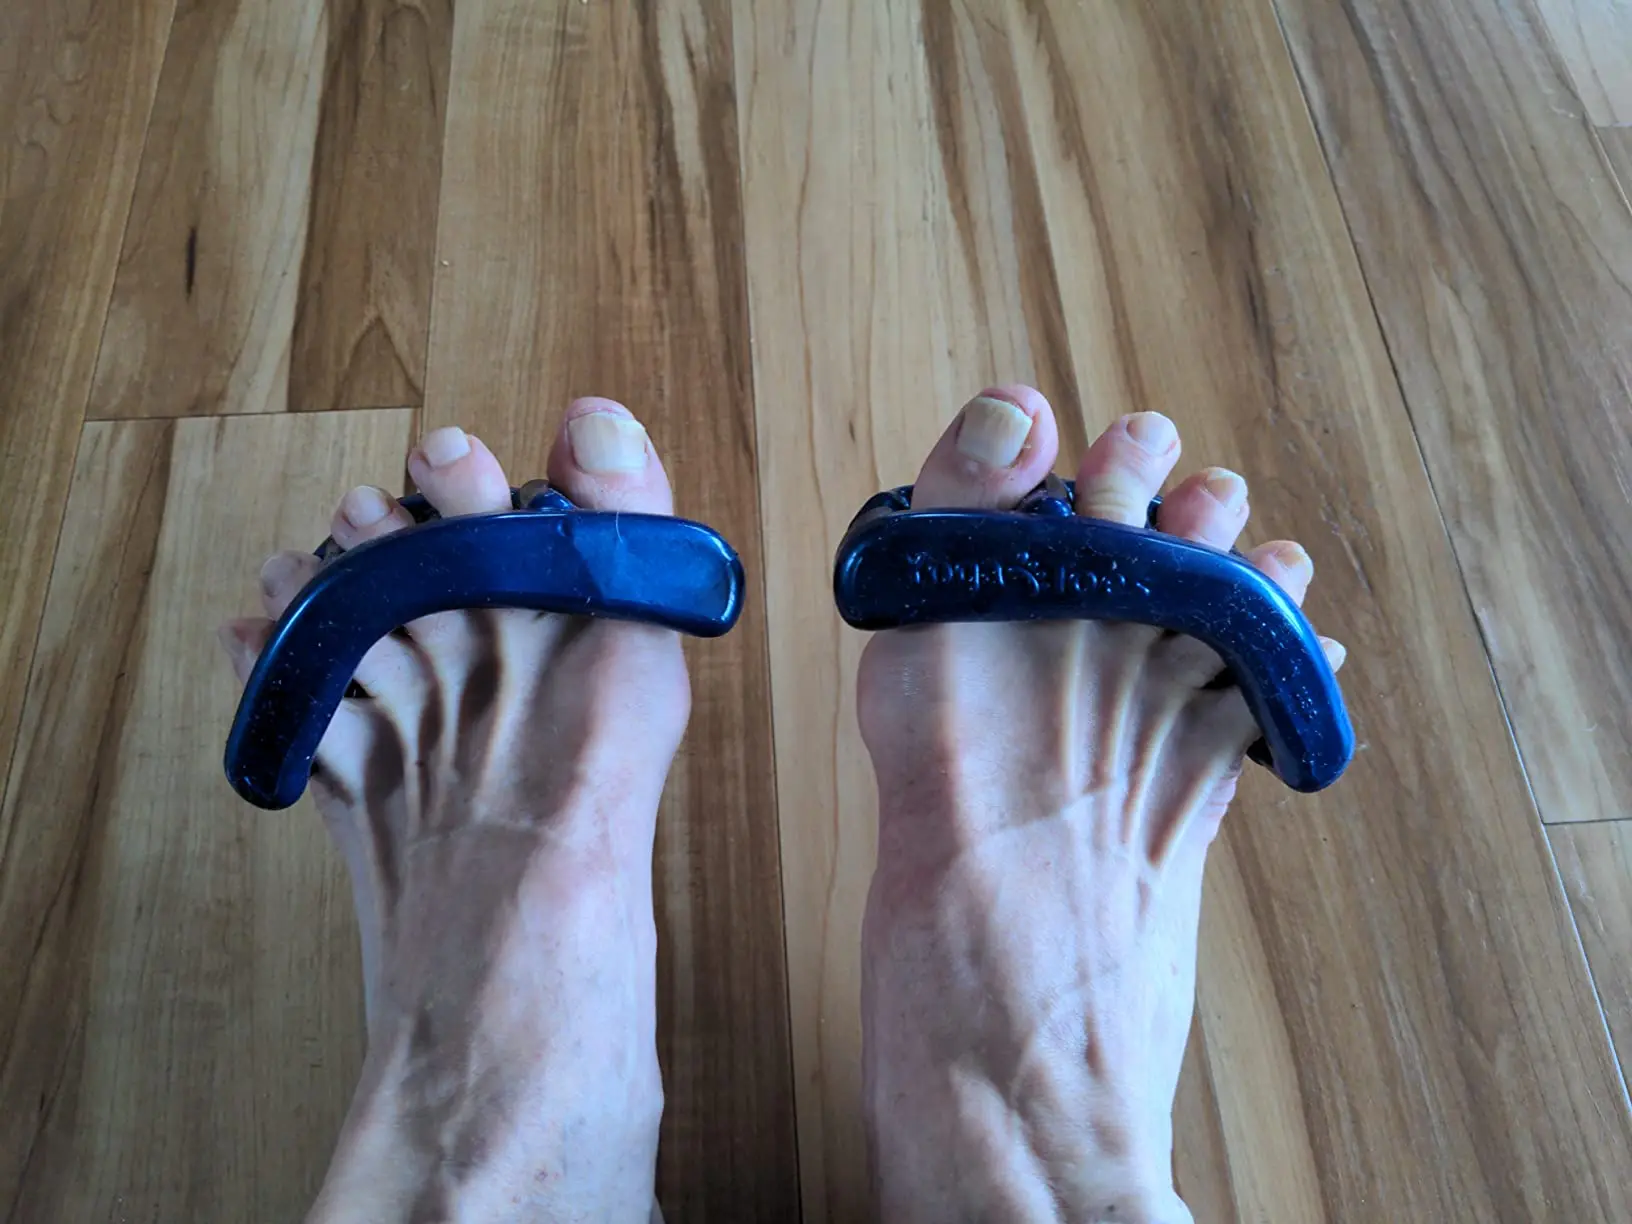 yoga and flat feet - Do yoga toes help with flat feet